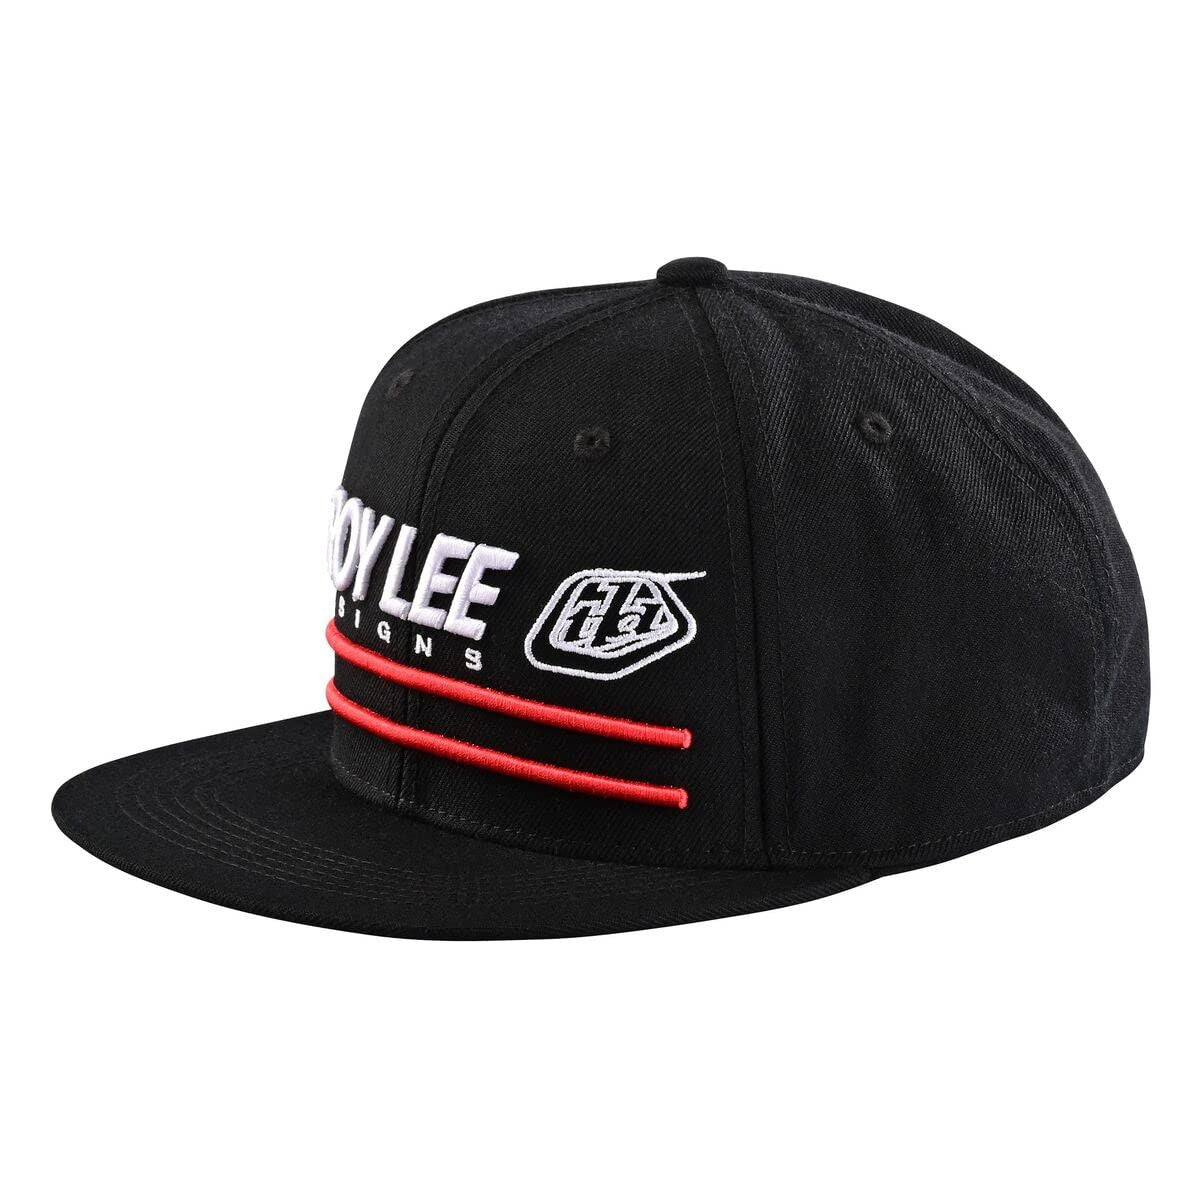 Troy Lee Designs Drop In Snapback Hat Black White - Troy Lee Designs Hats